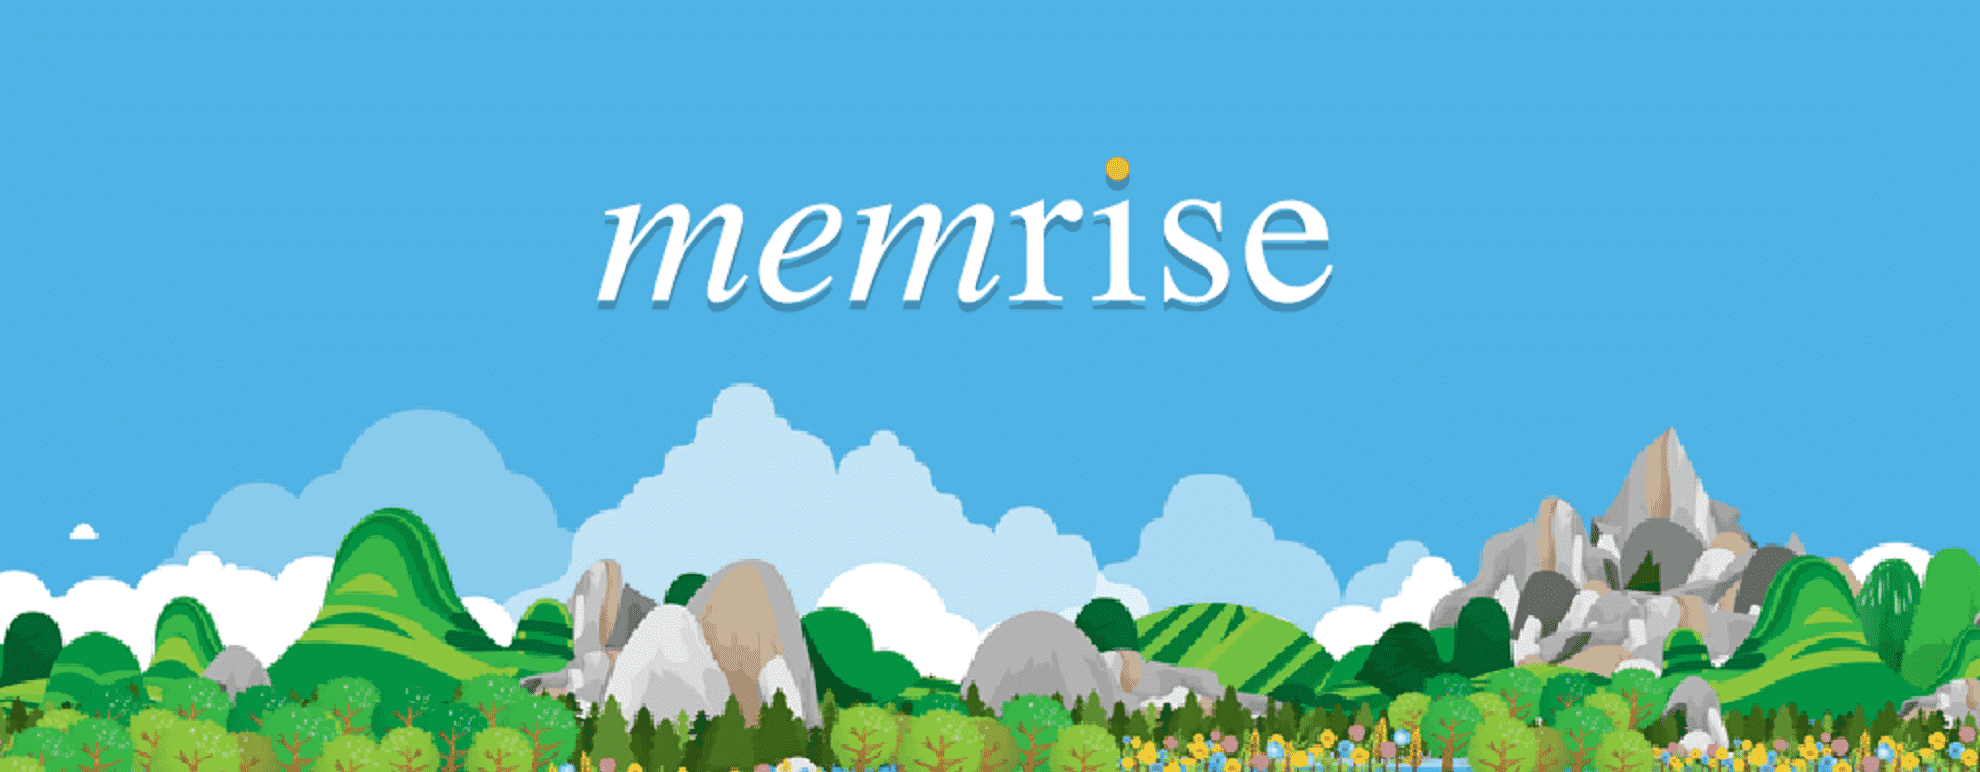 New Memrise Style Background e1454540396619 التعلم السهل والمفيد مع برنامج (Memrise) مجلة نقطة العلمية